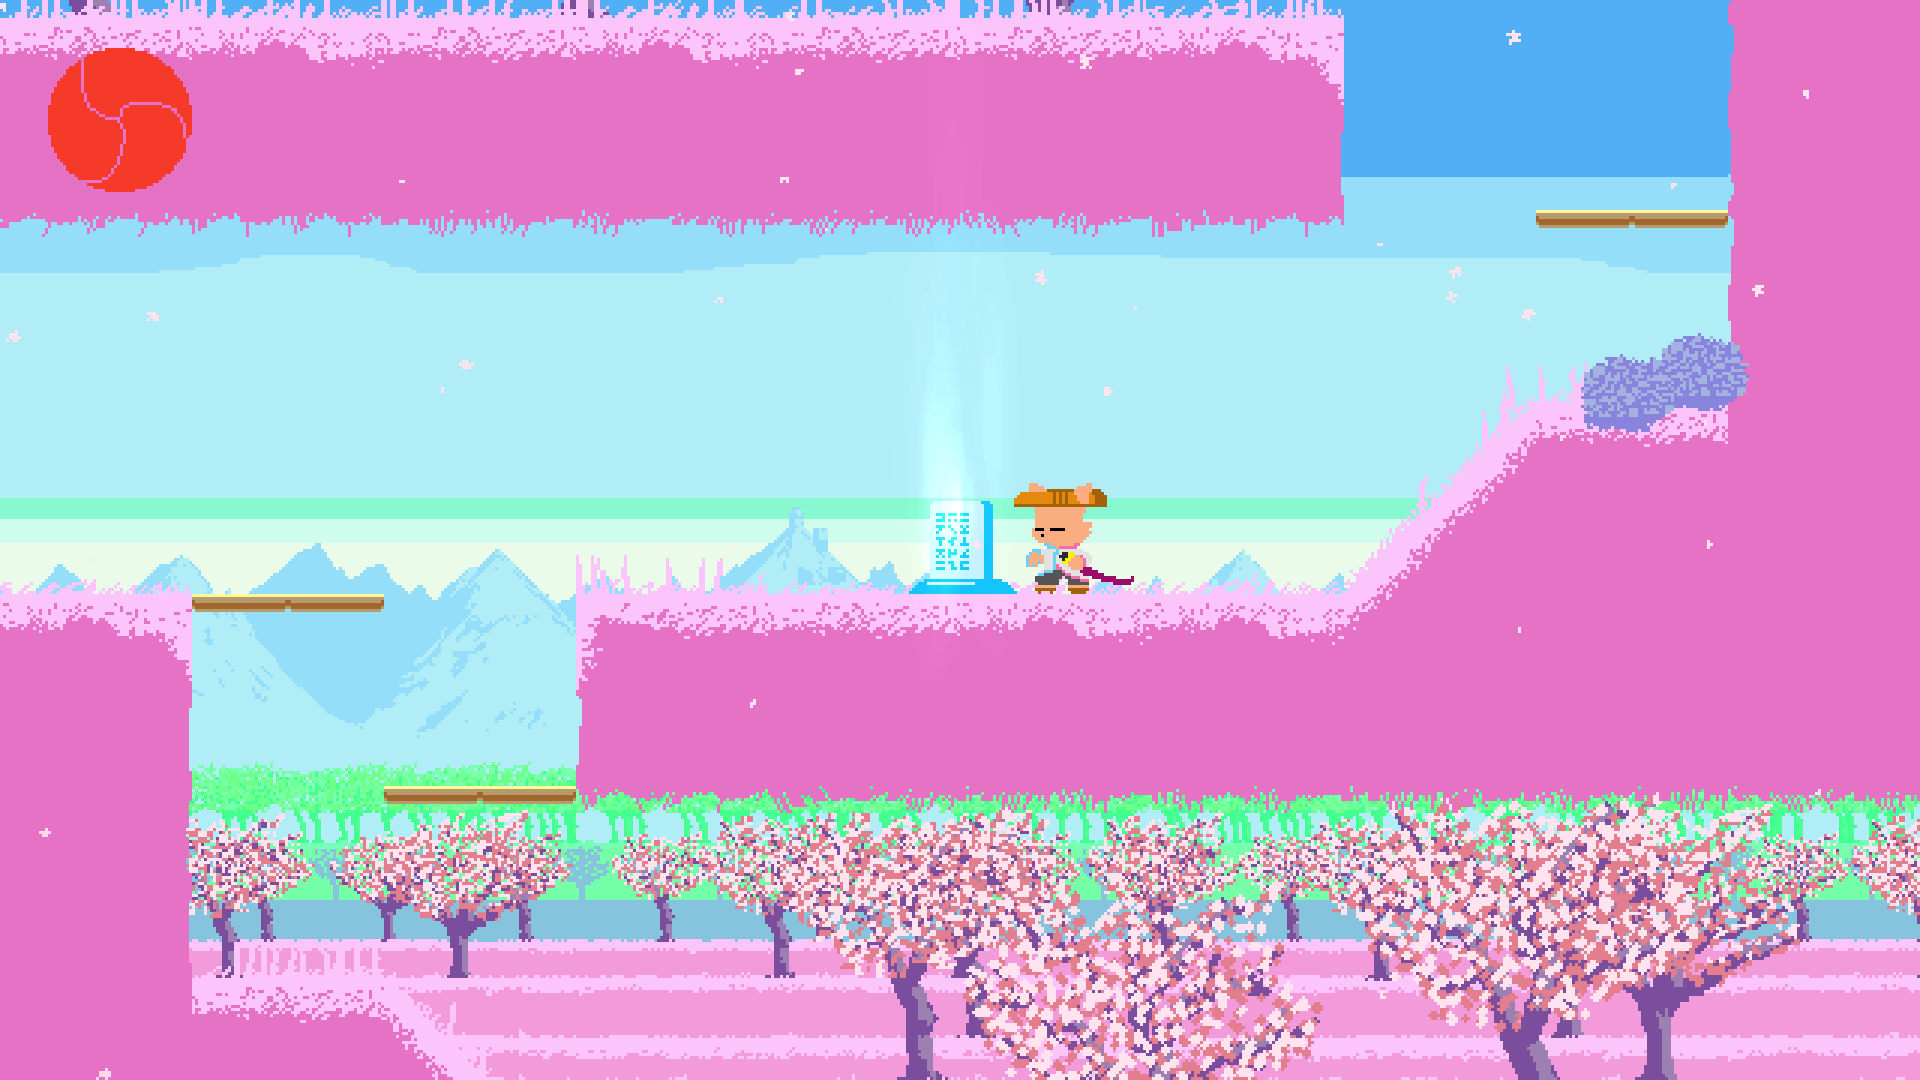 Ato game screenshot, pink background